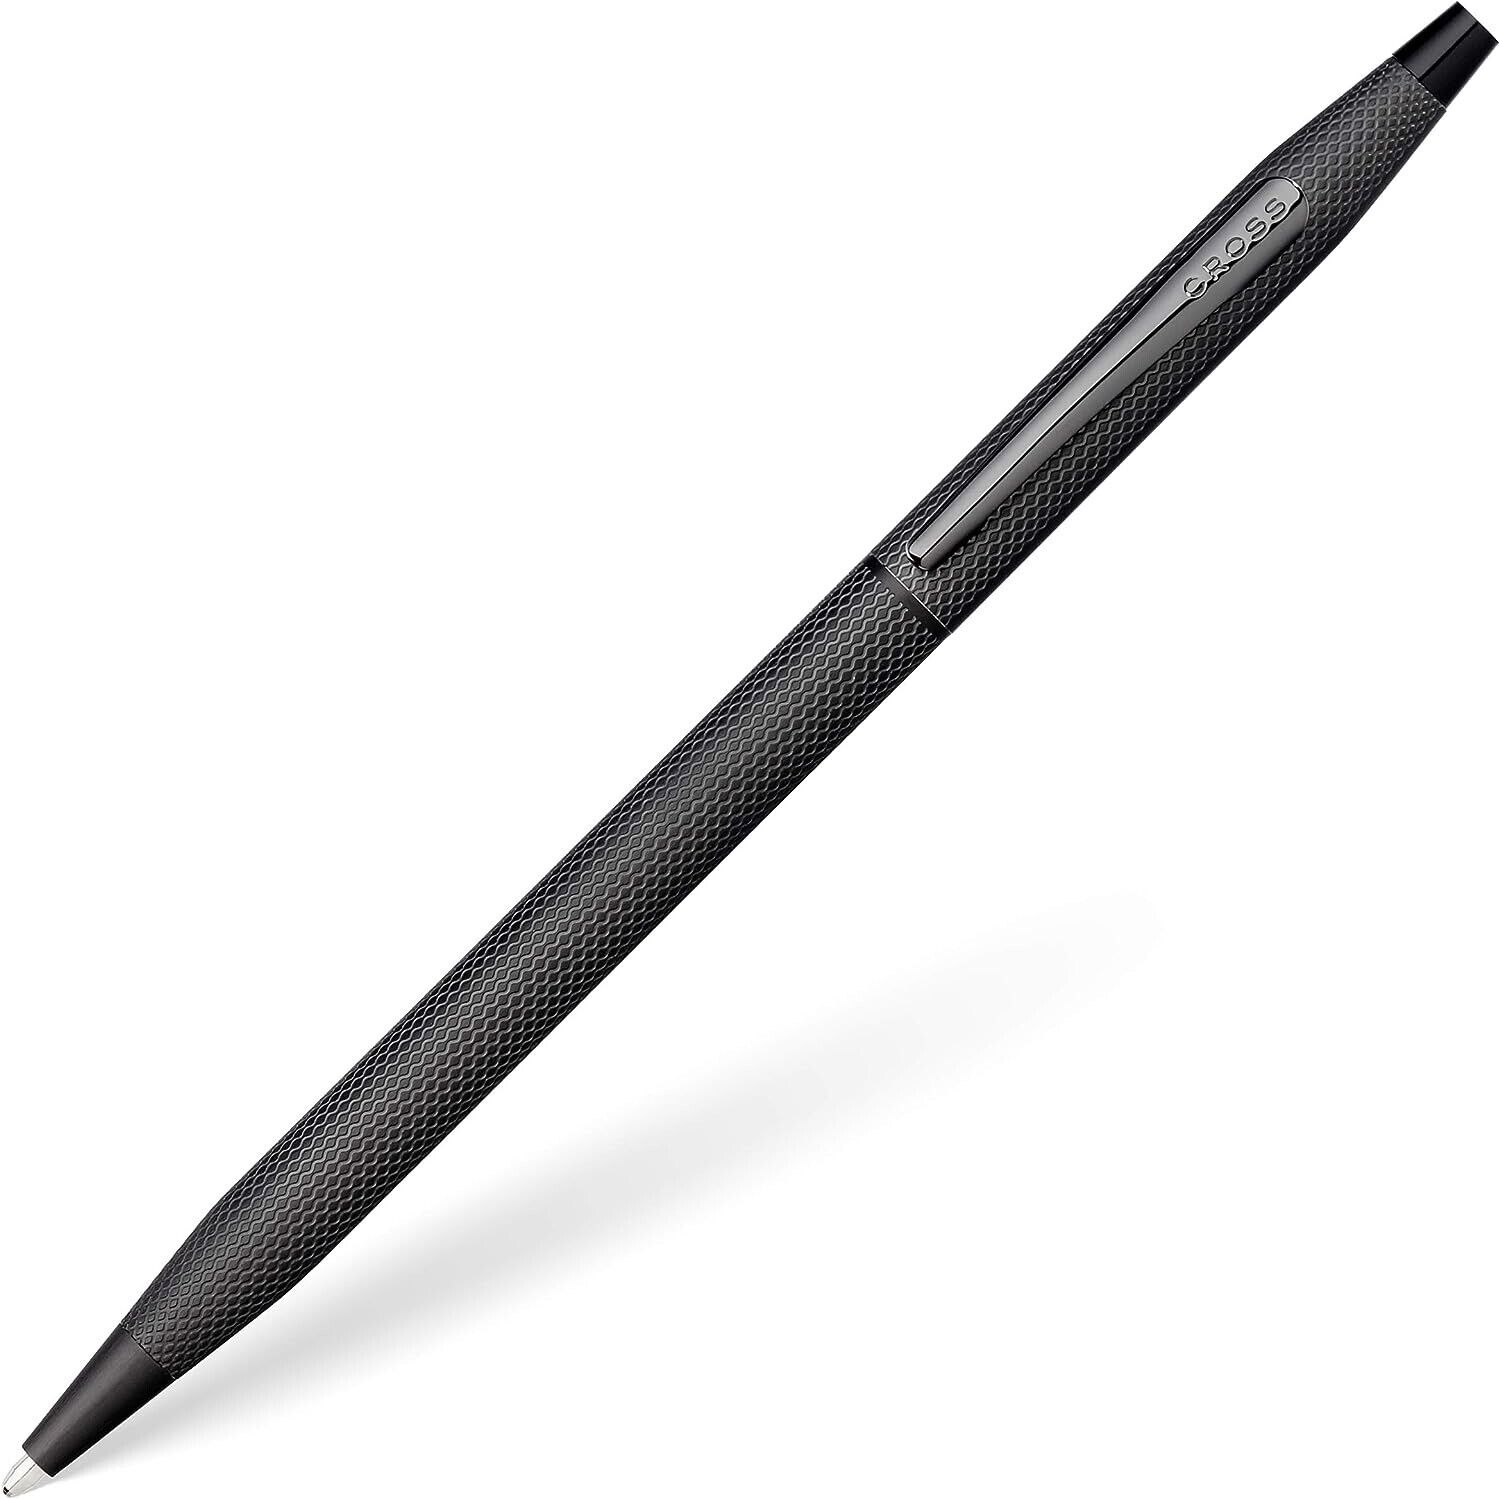 Cross Classic Century Ballpoint Pen, Black PVD, Brand New in Box